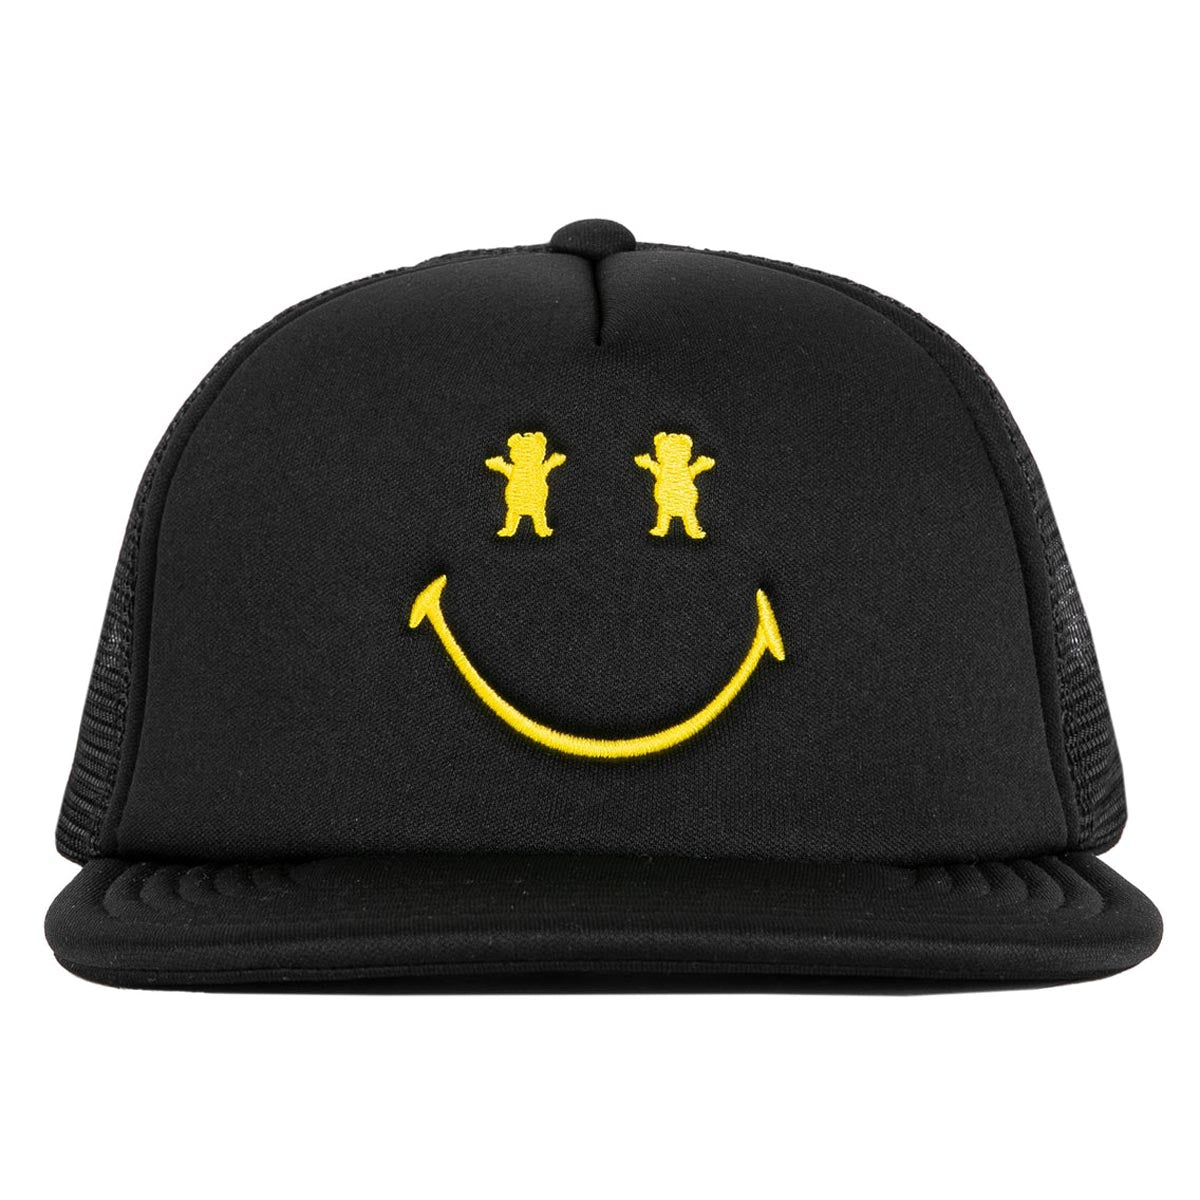 Grizzly x Smiley World Big Smile Trucker Snapback Hat - Black image 2